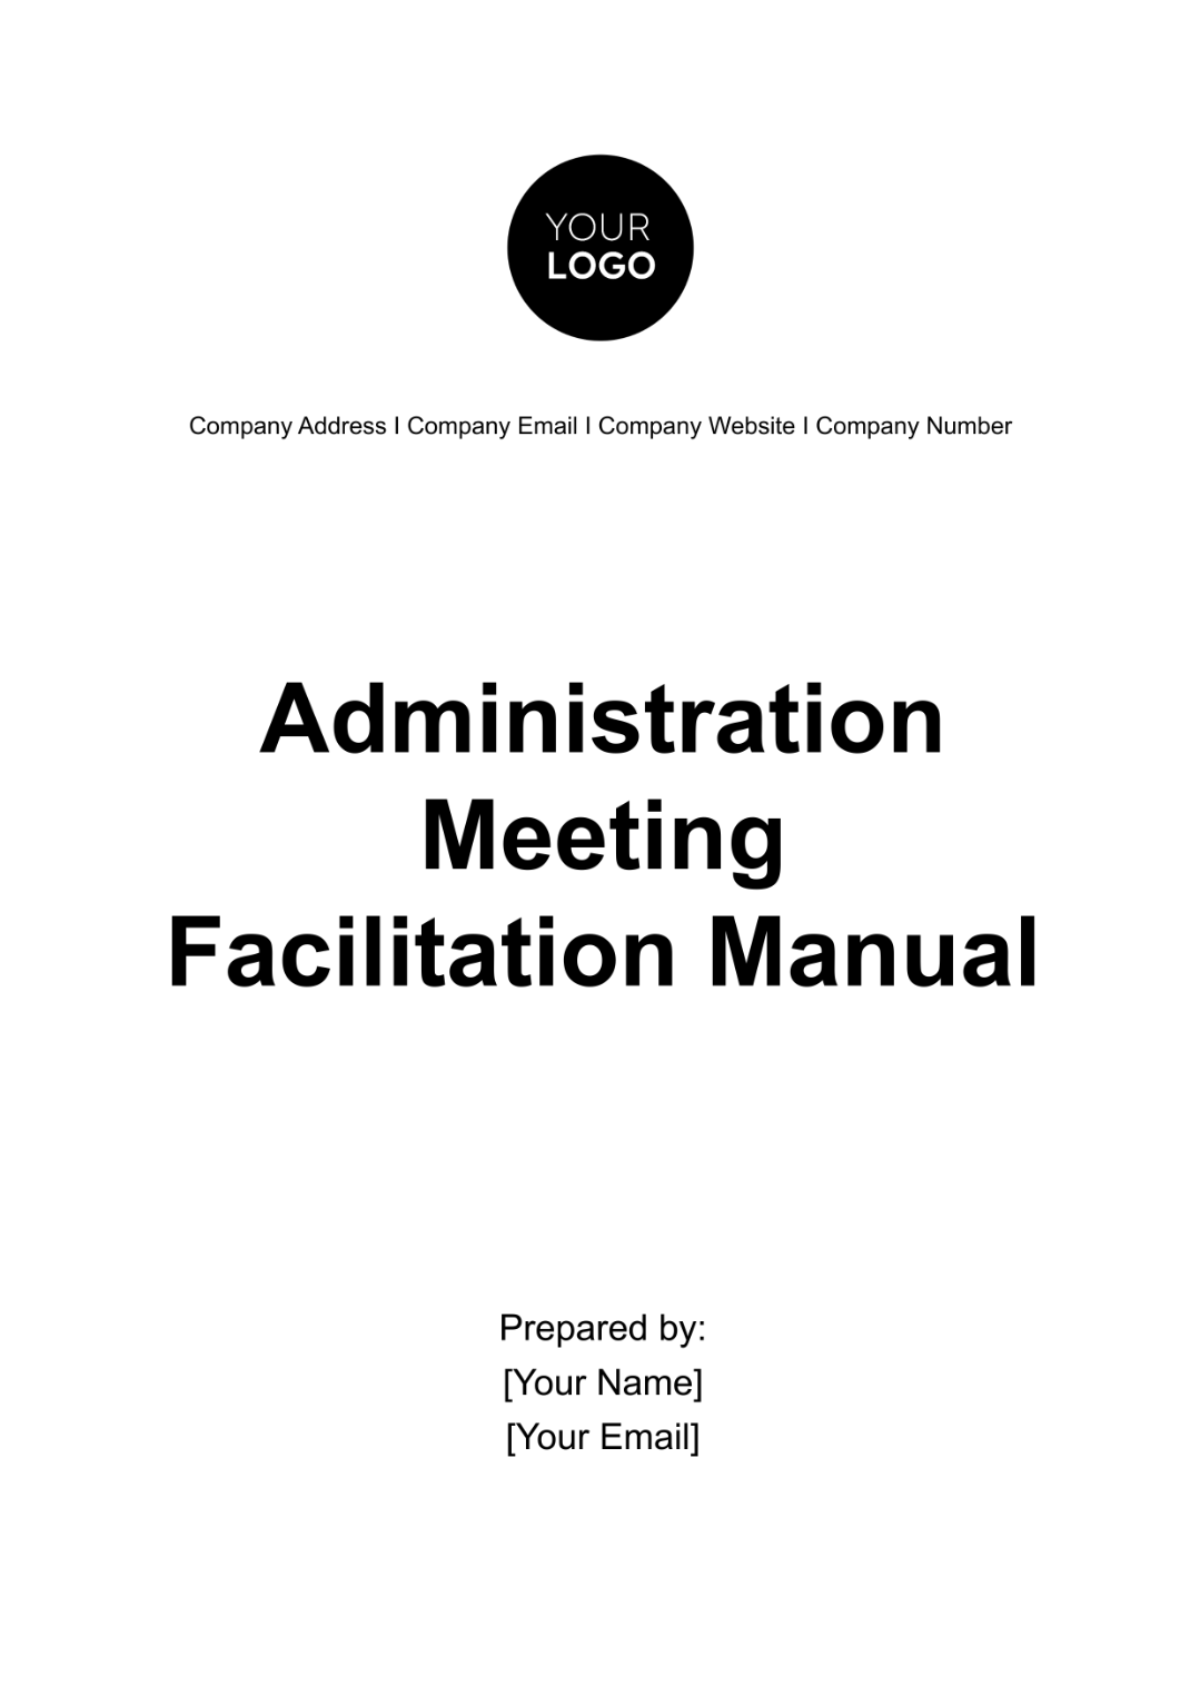 Administration Meeting Facilitation Manual Template